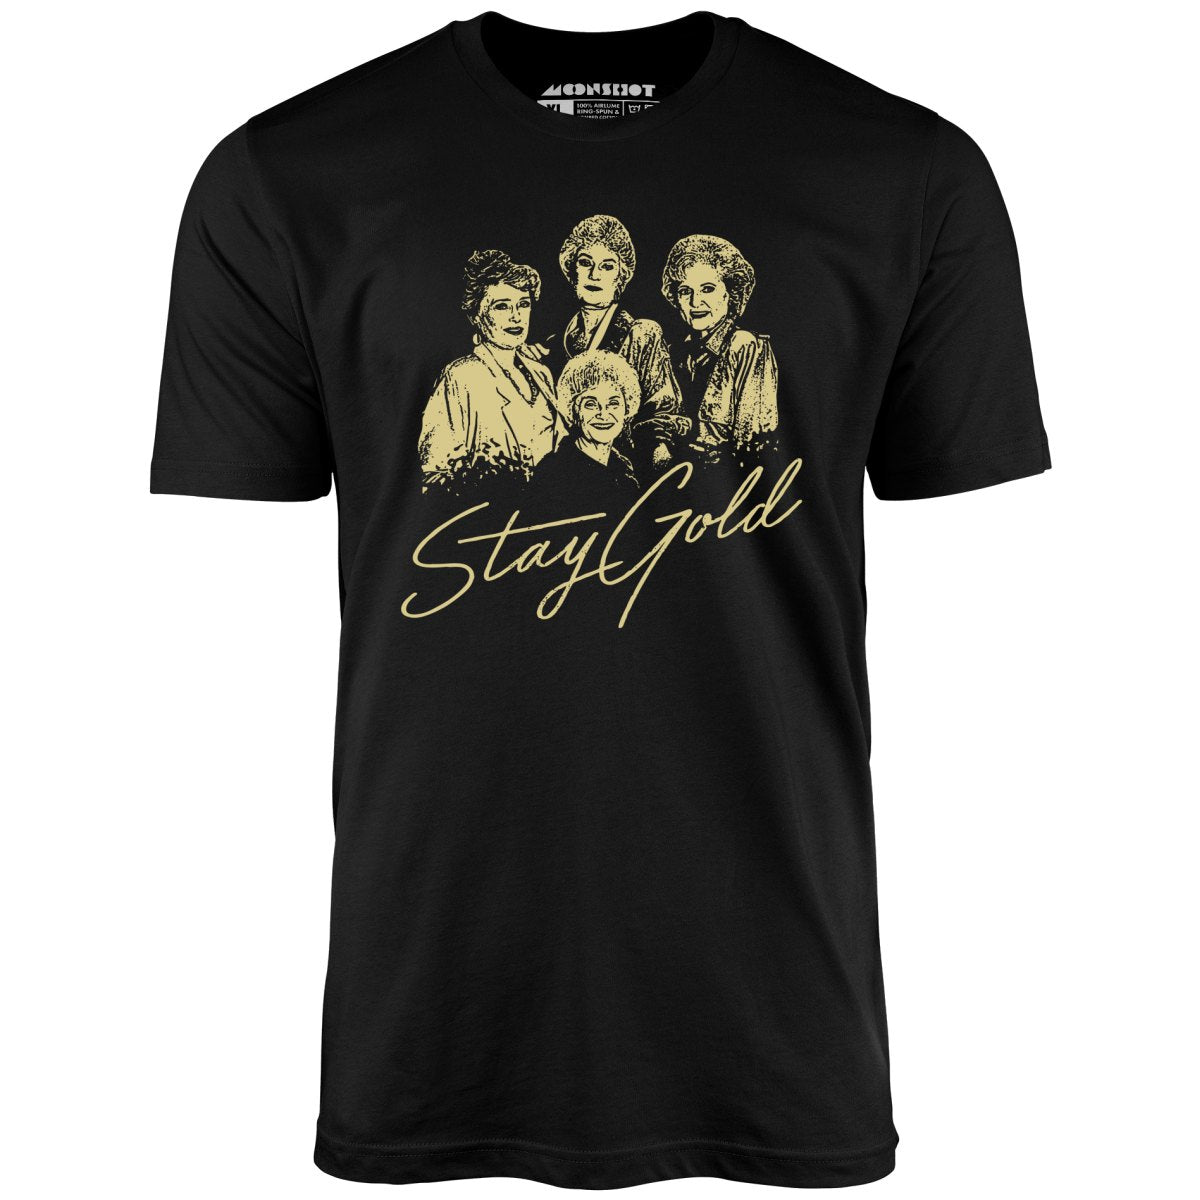 Stay Gold - Golden Girls - Unisex T-Shirt